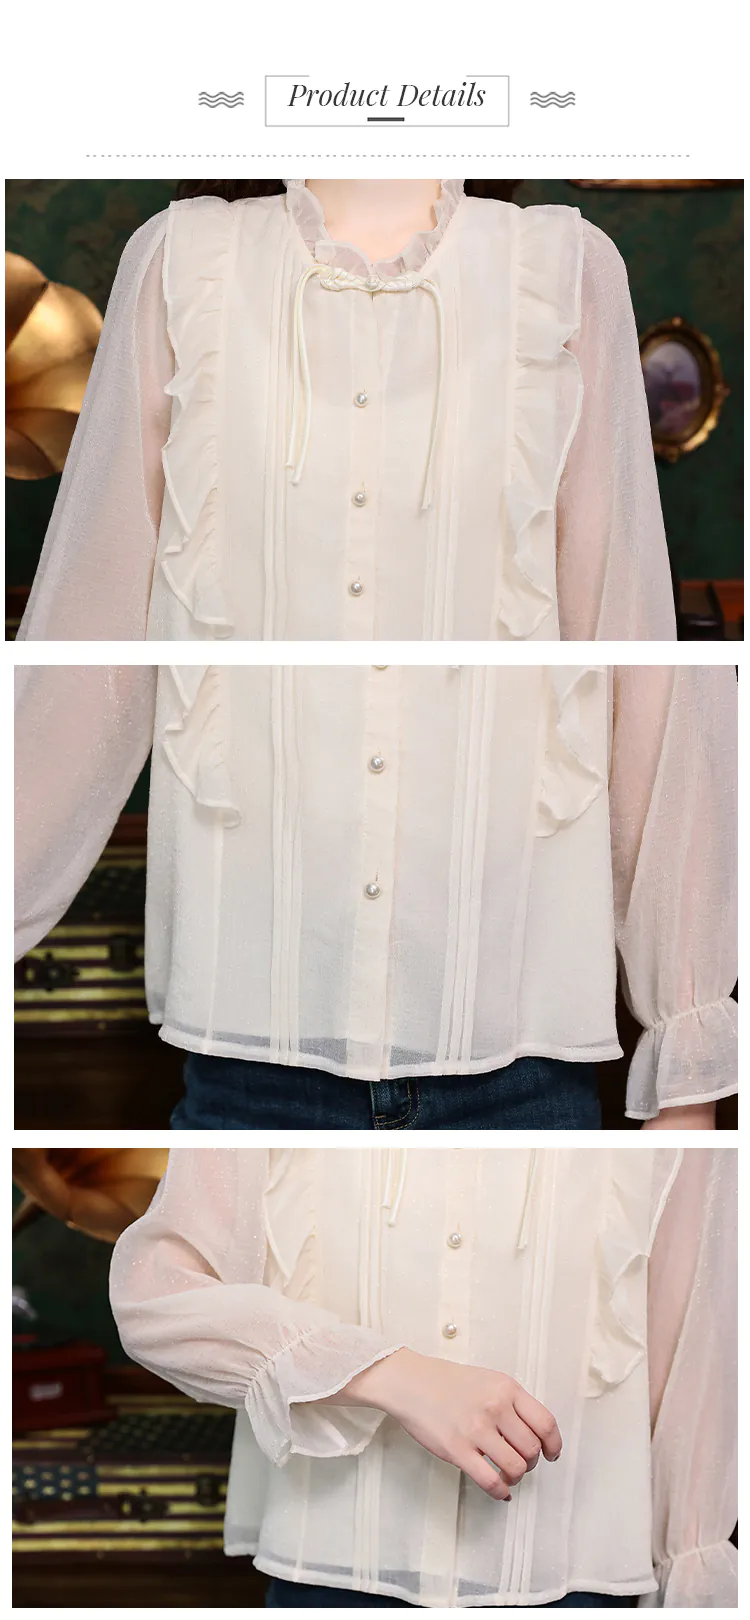 Classy-Ruffle-Edge-Solid-Color-Cool-Summer-Casual-Chiffon-Blouse-Shirt15